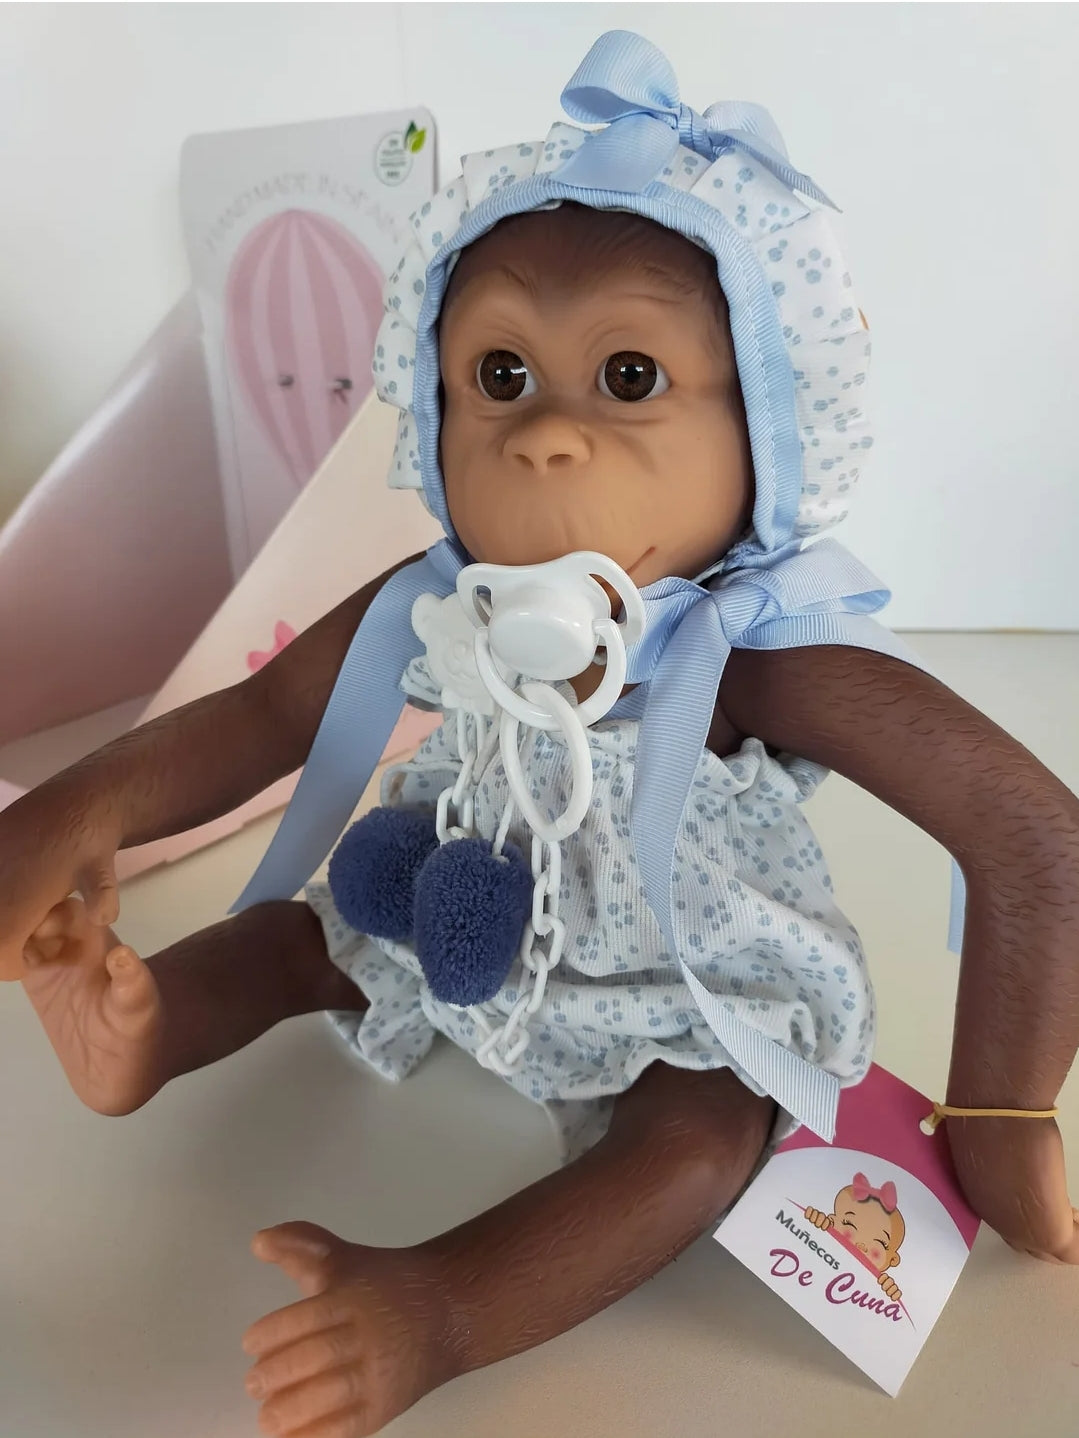 Spanish Baby Chipa Reborn Monkey Doll 020215 - IN STOCK NOW